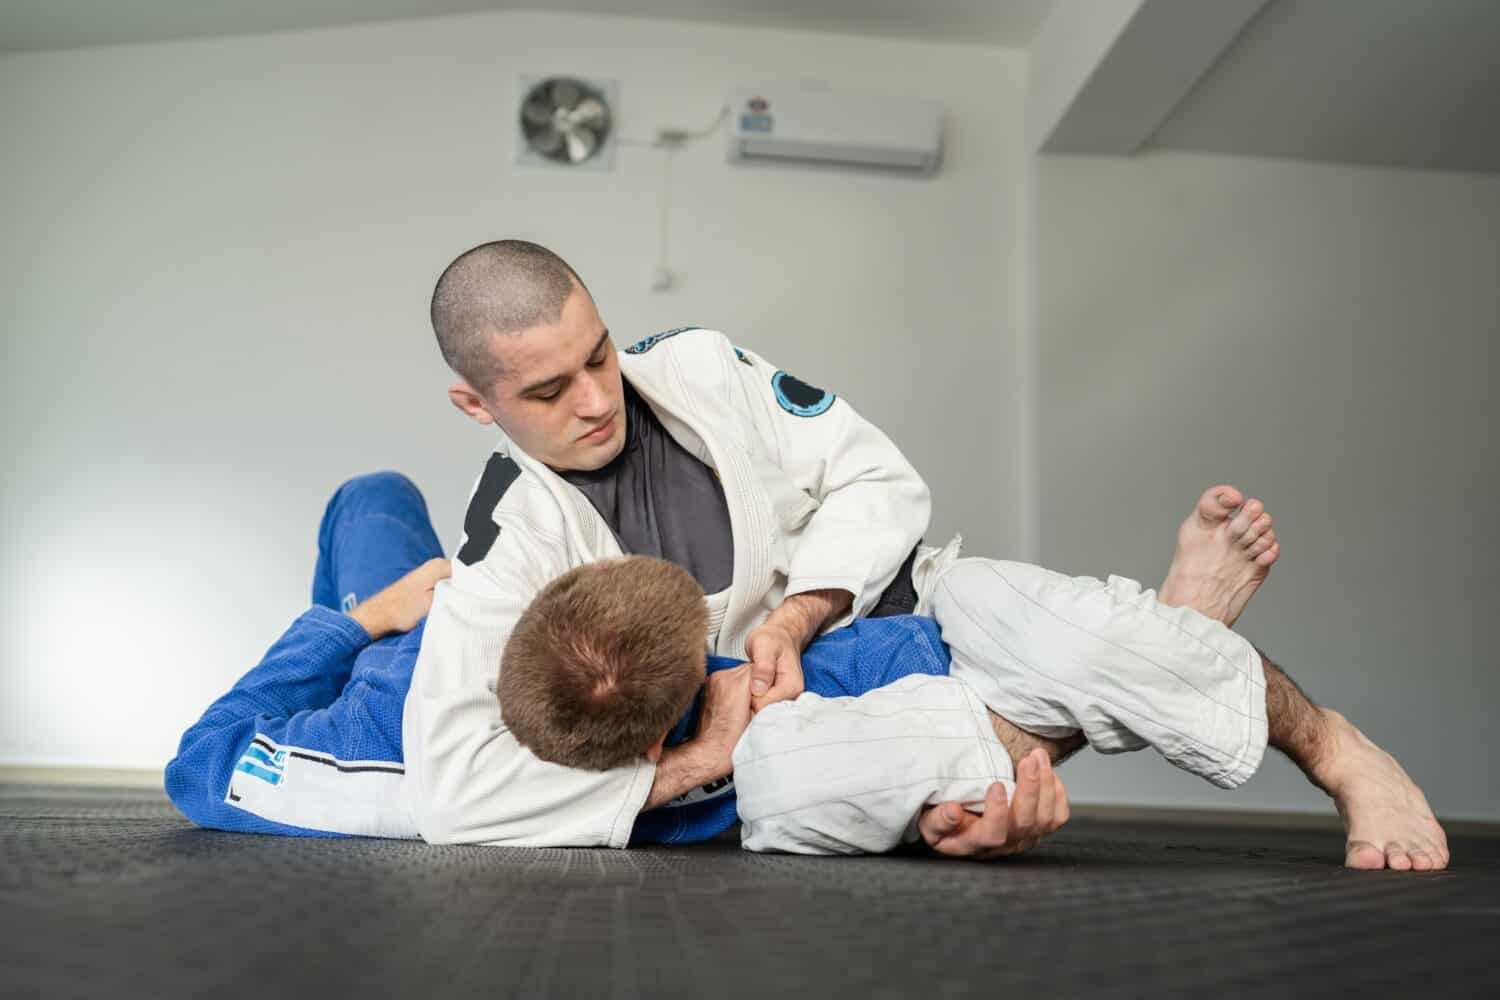 two athletes training Brazilian jiu jitsu kesa gatame side control hold BJJ in a kimono gi uniform at the academy